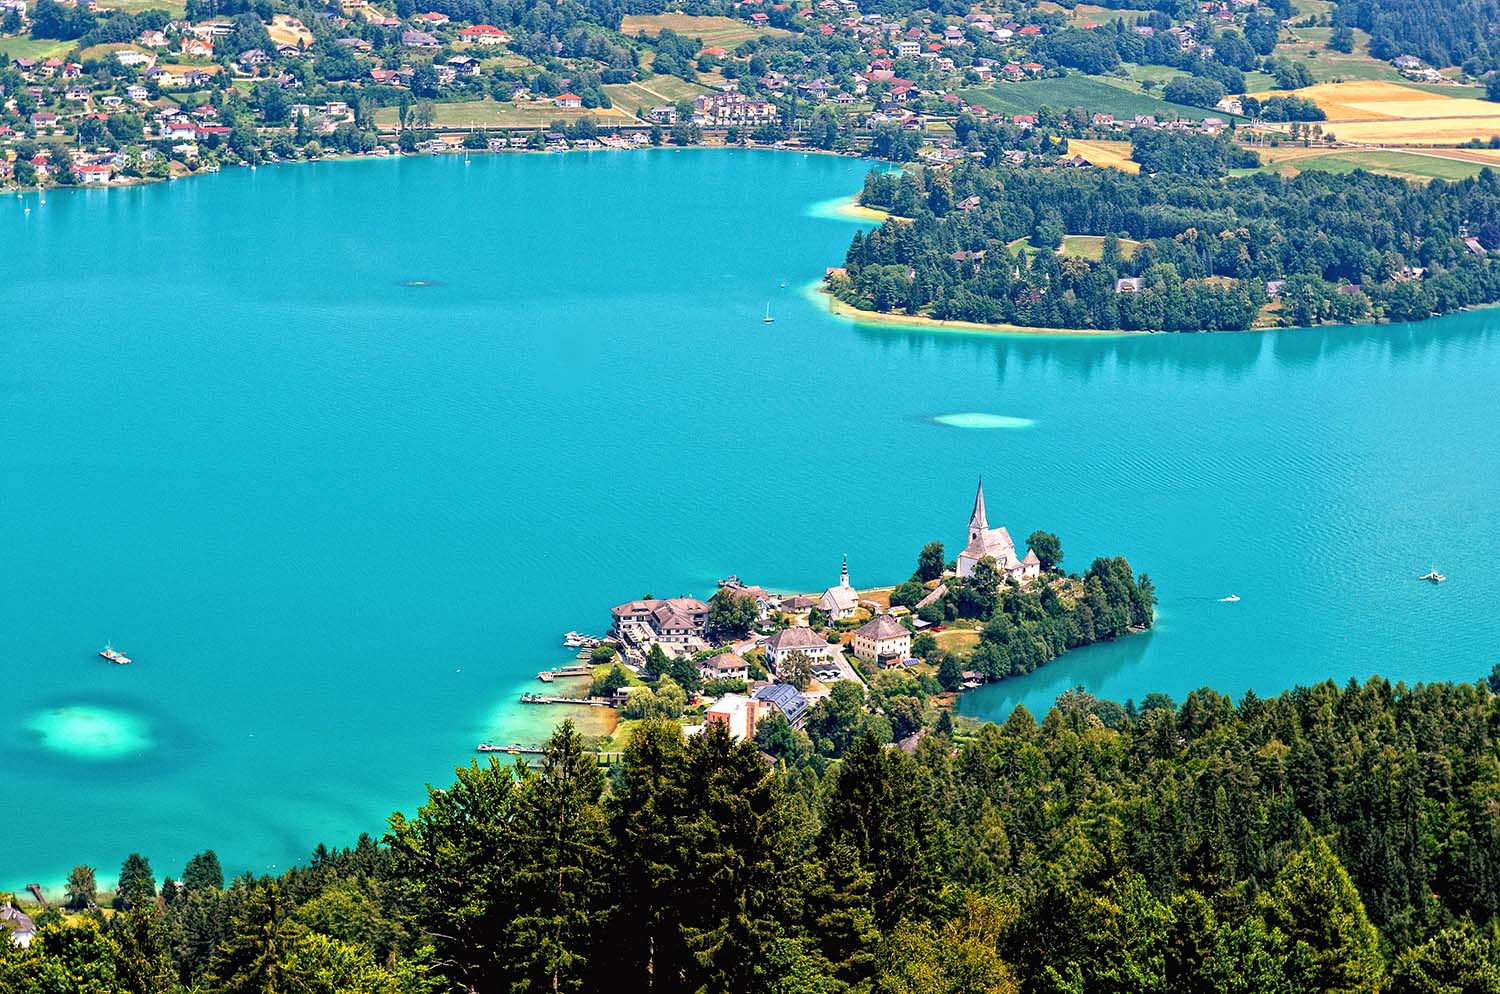 Village Maria Worth on Lake Worthersee in Carinthia, Austria